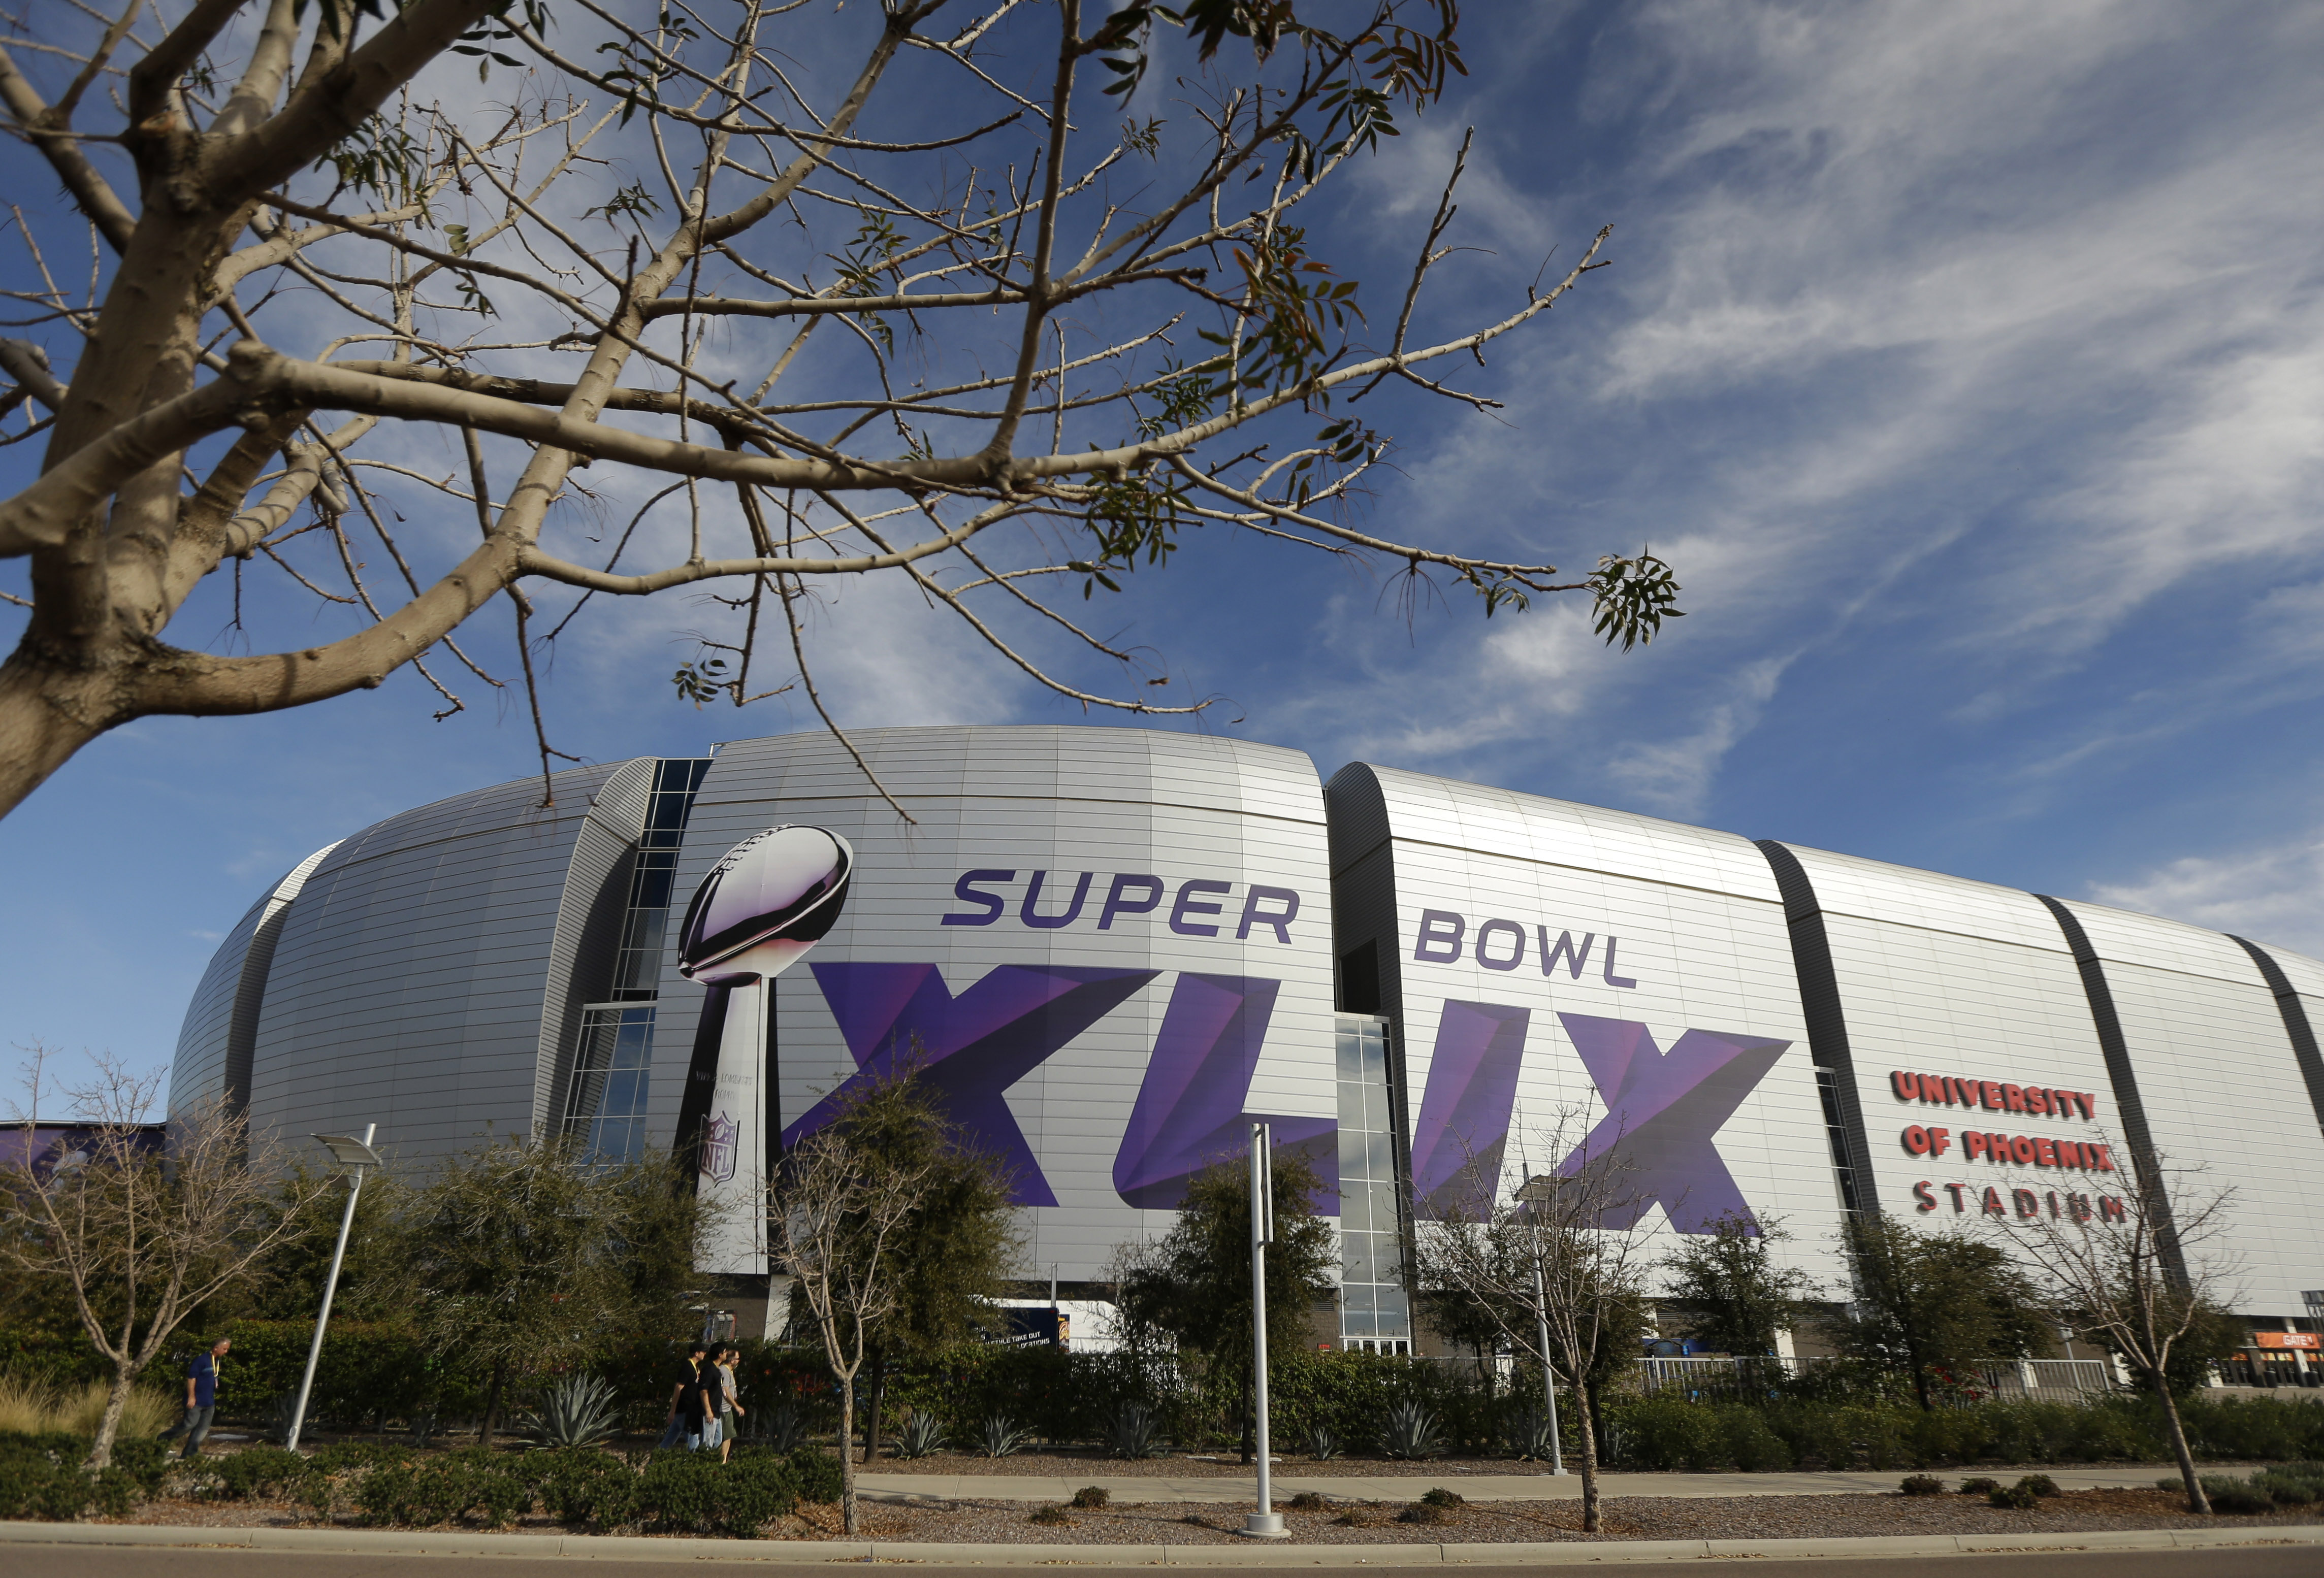 The University of Phoenix Stadium in Glendale, Ariz, where Super Bowl XLIX will take place on Feb. 1, 2015. (Charlie Riedel—AP)